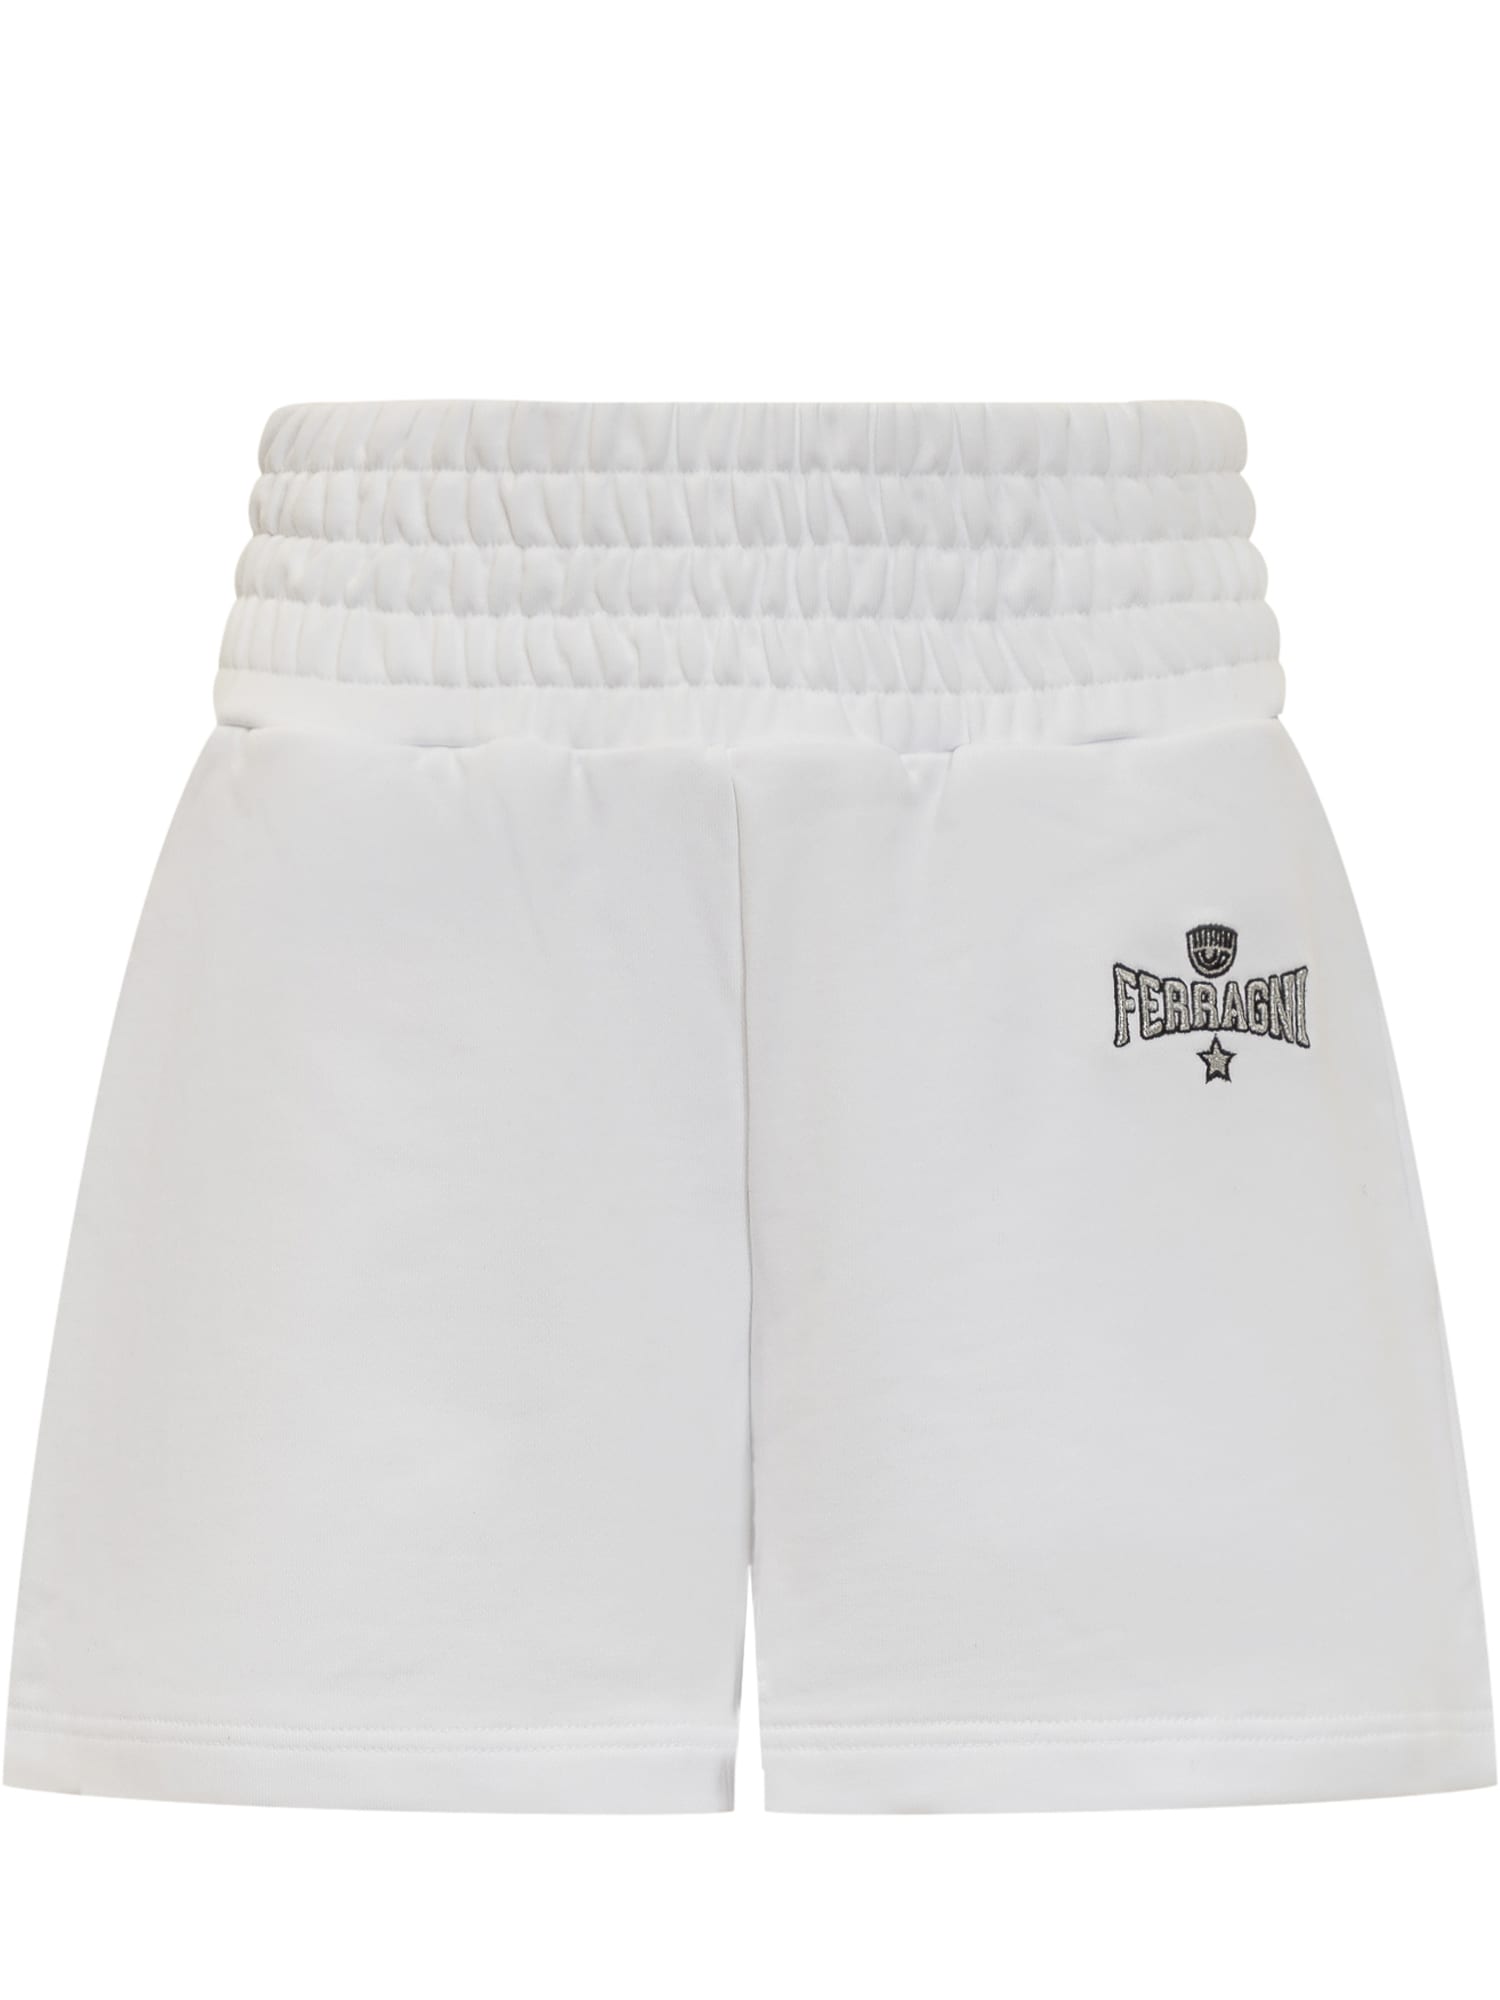 Ferragni 191 Shorts